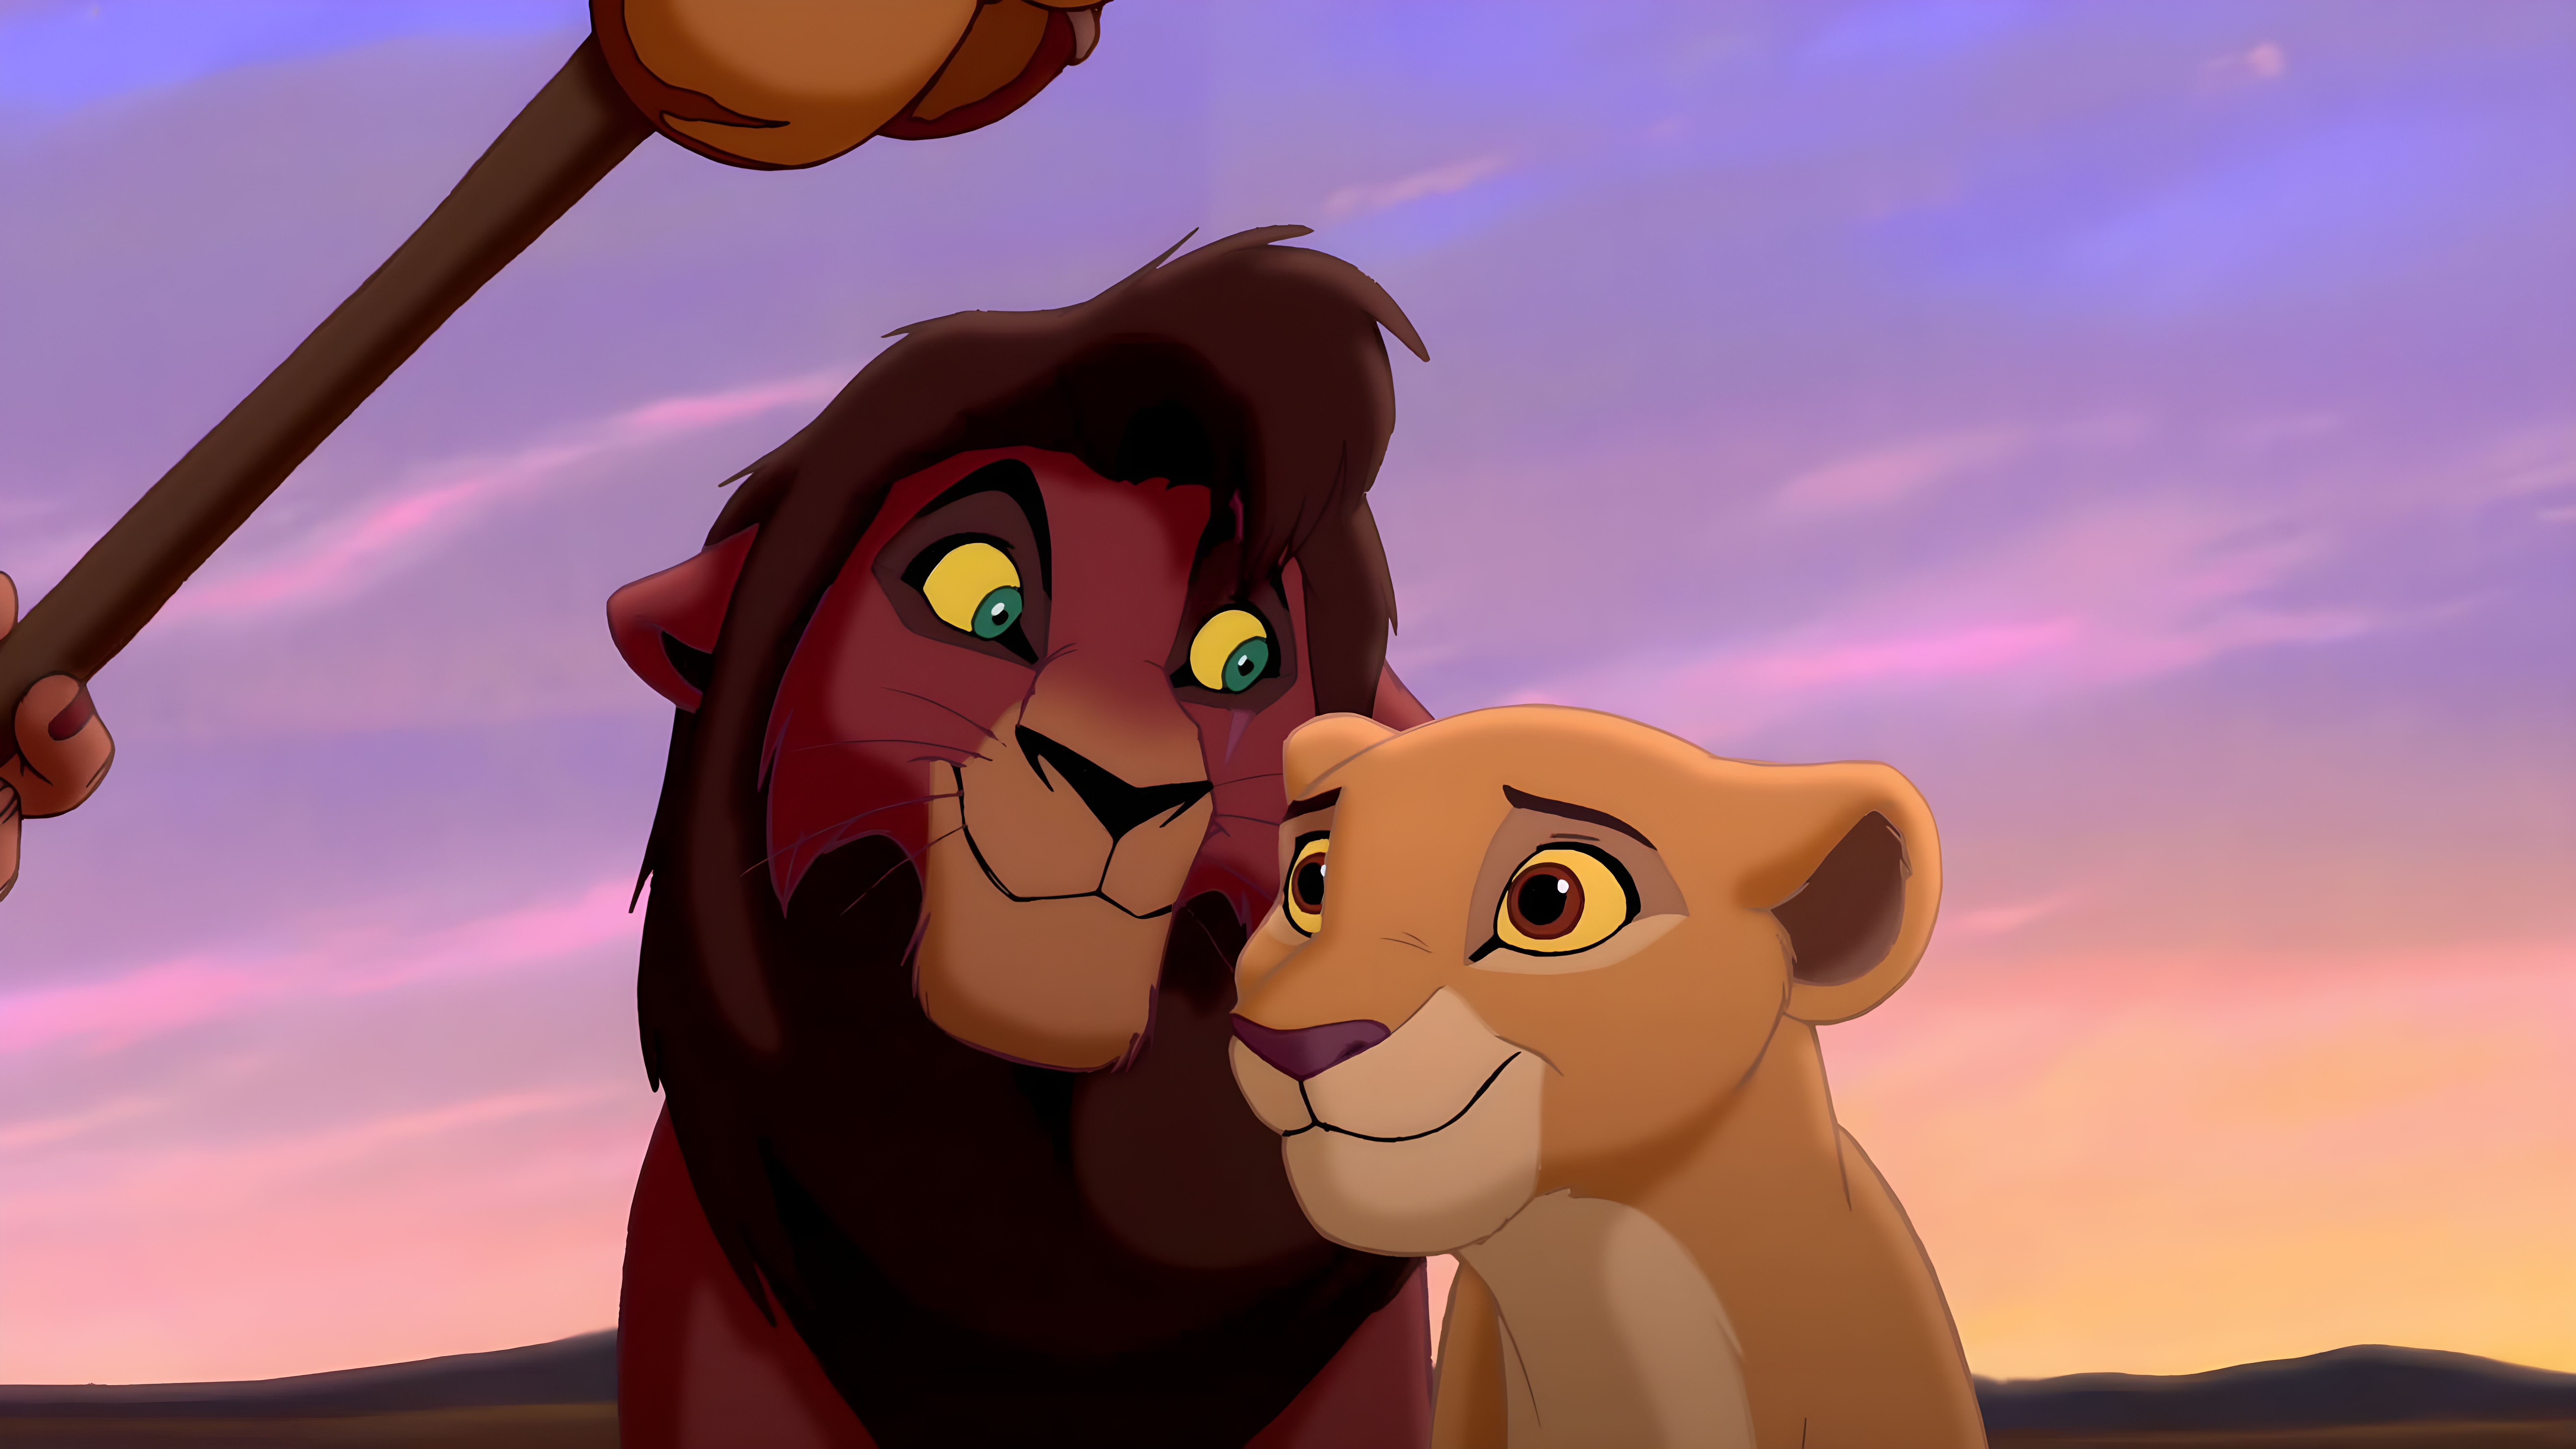 Kovu and Kiara from The Lion King 2: Simba's Pride